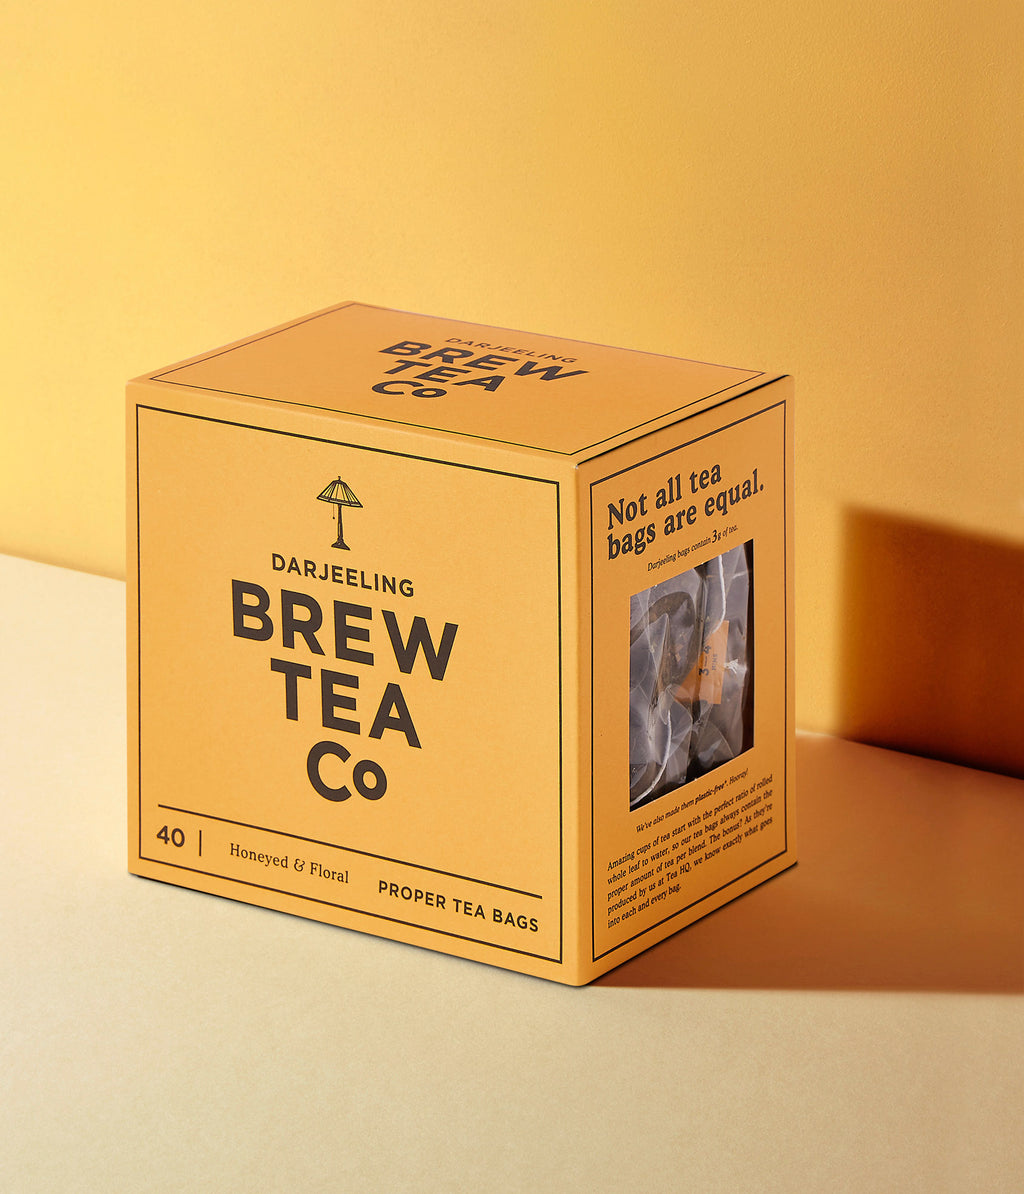 Darjeeling - Proper Tea Bags